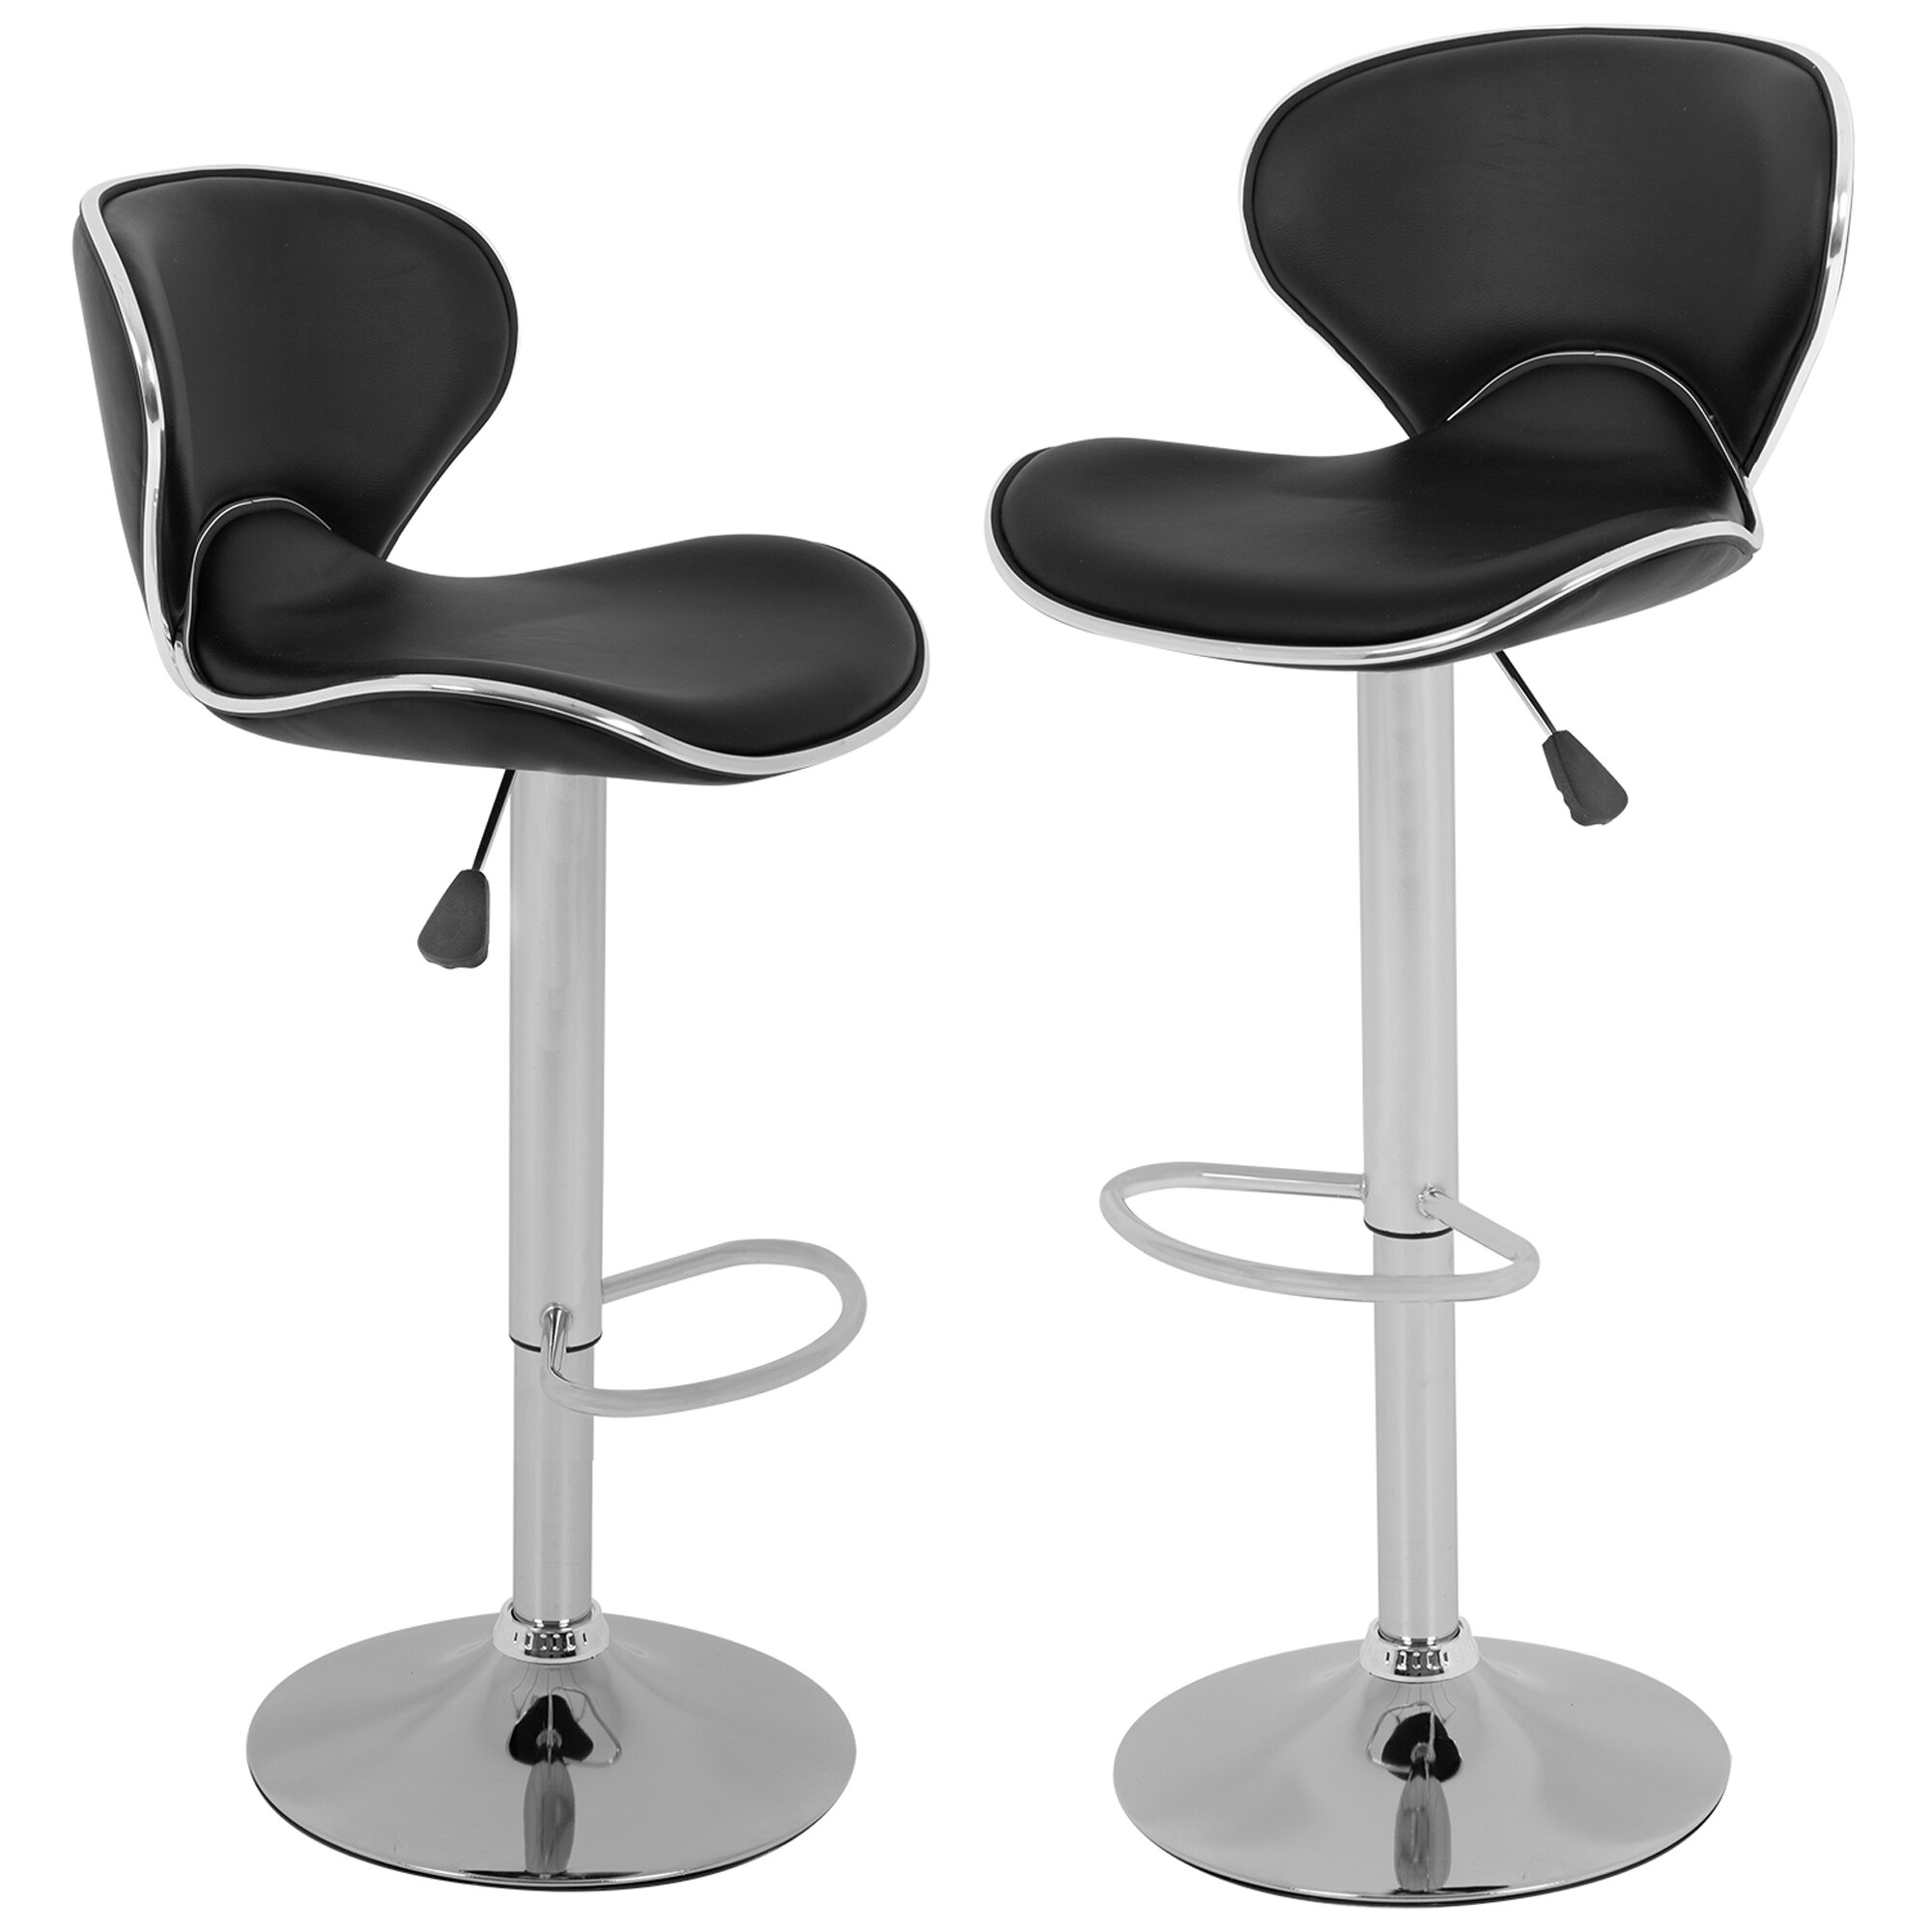 Set of 2 Bar Stools PU Leather Adjustable Height Swivel Dining Room Chair Black 